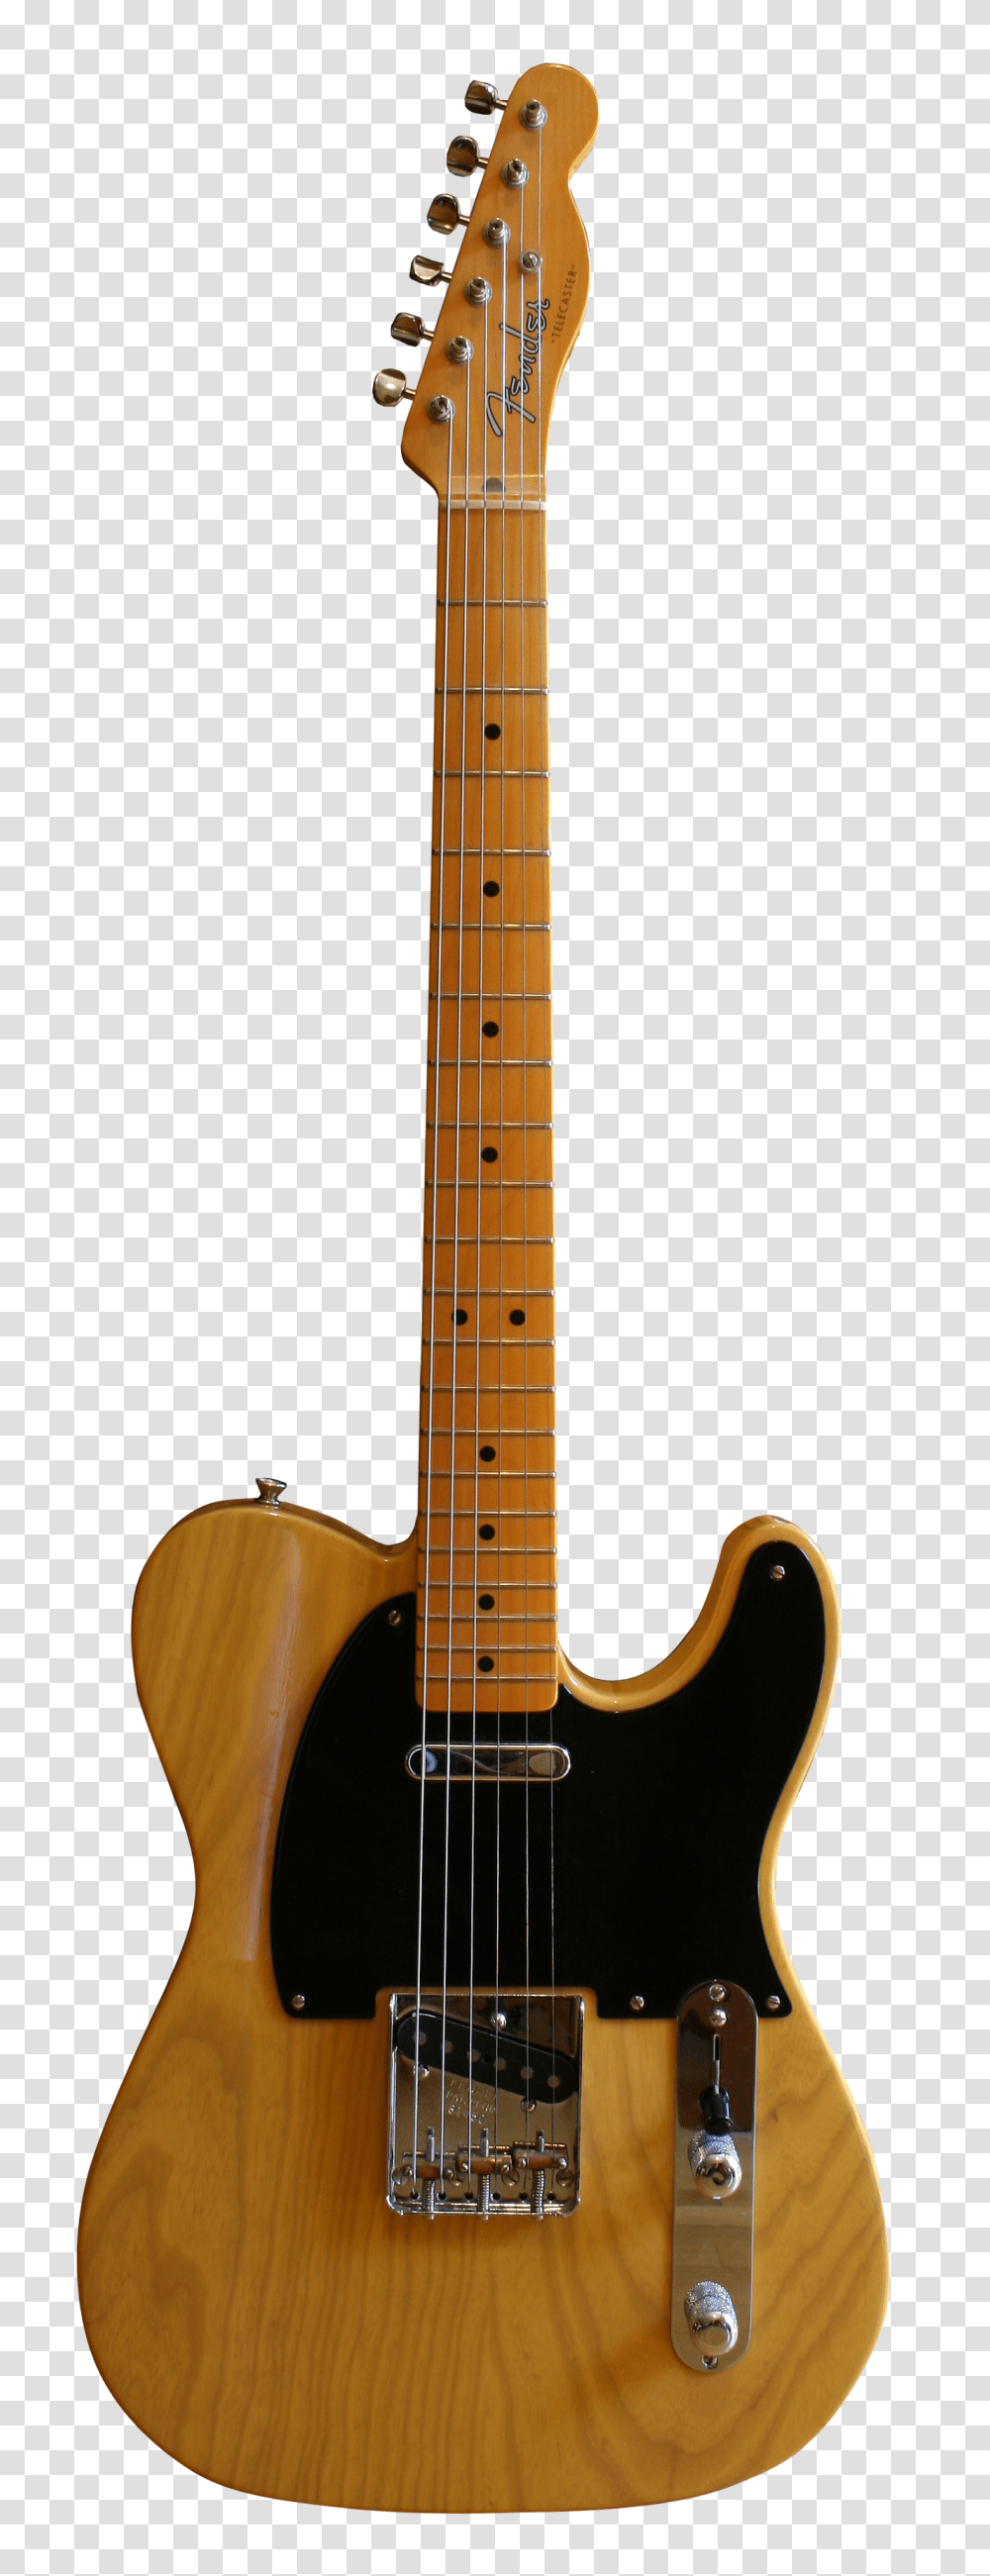 Fender Fender Images, Guitar, Leisure Activities, Musical Instrument, Bass Guitar Transparent Png